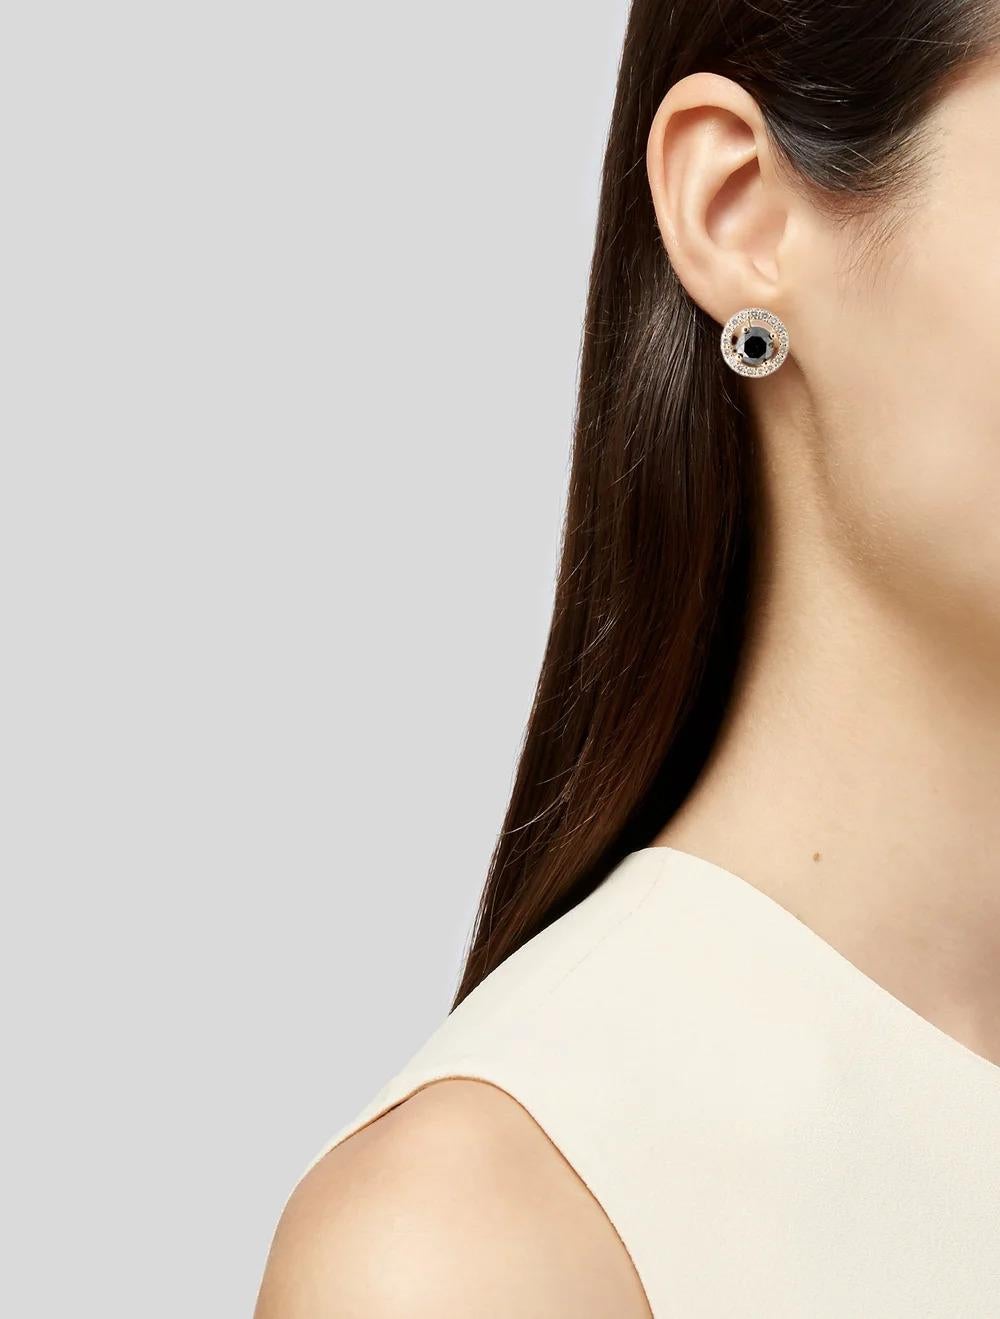 Round Cut 14K Diamond & Jacket Stud Earrings: Timeless Sparkle, Elegant Statement Jewelry For Sale